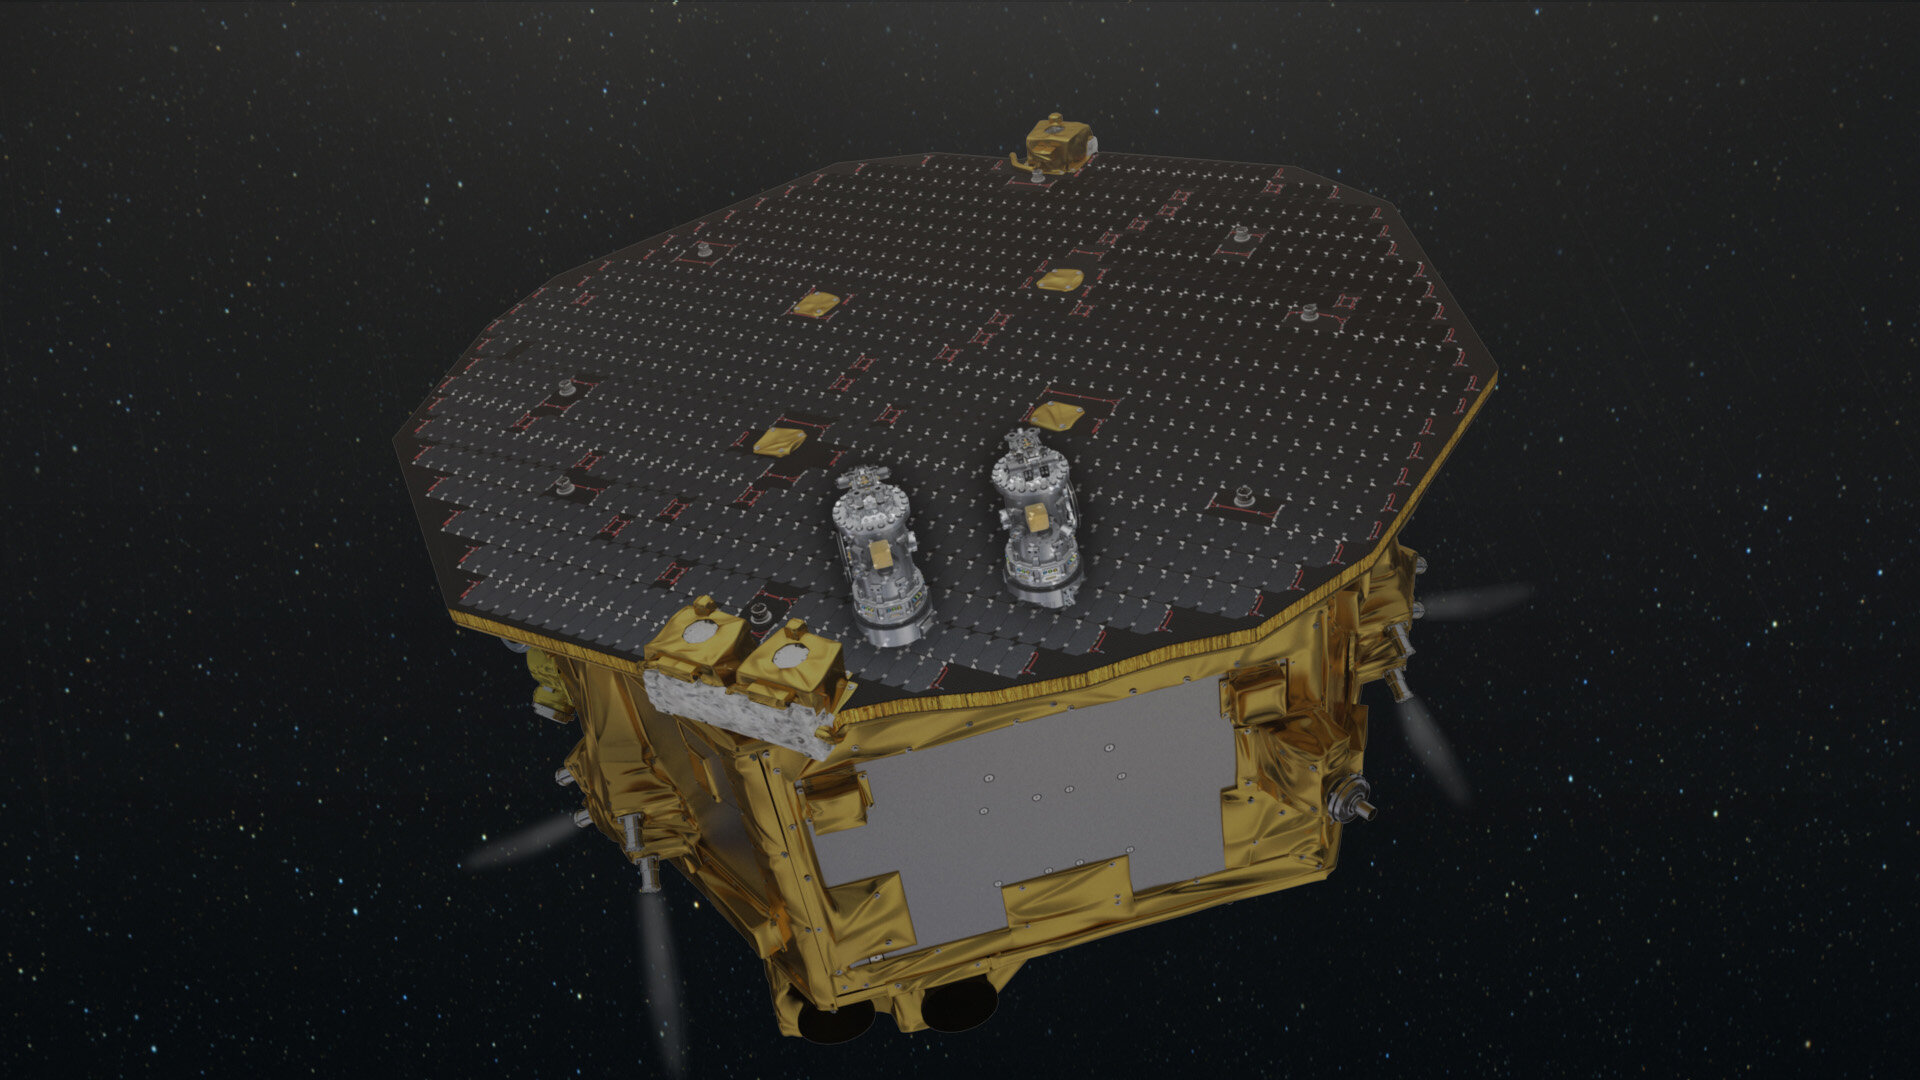 LISA Pathfinder operating in space